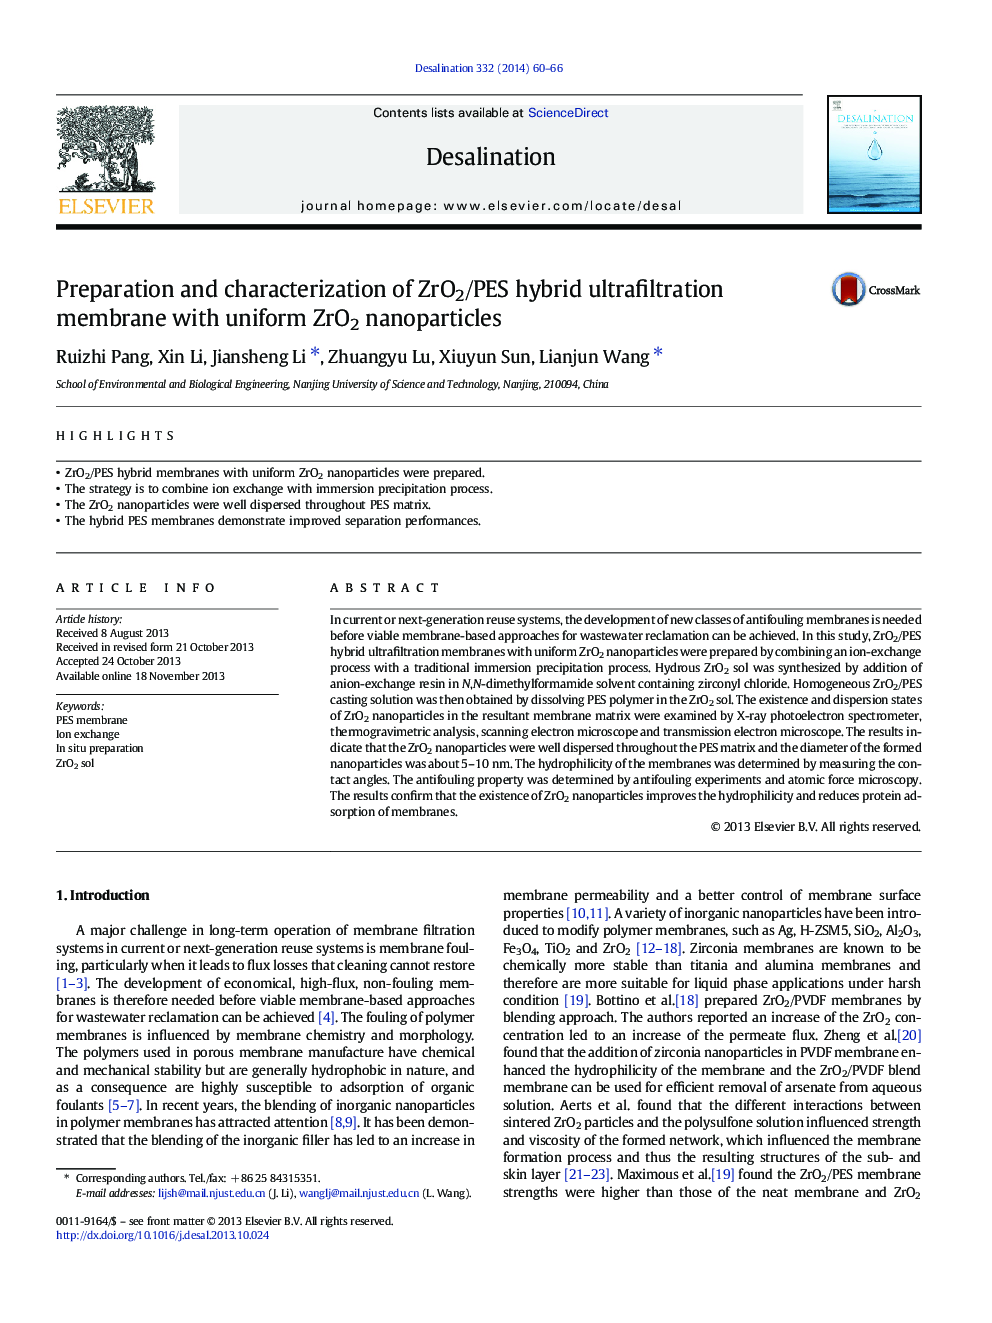 Preparation and characterization of ZrO2/PES hybrid ultrafiltration membrane with uniform ZrO2 nanoparticles